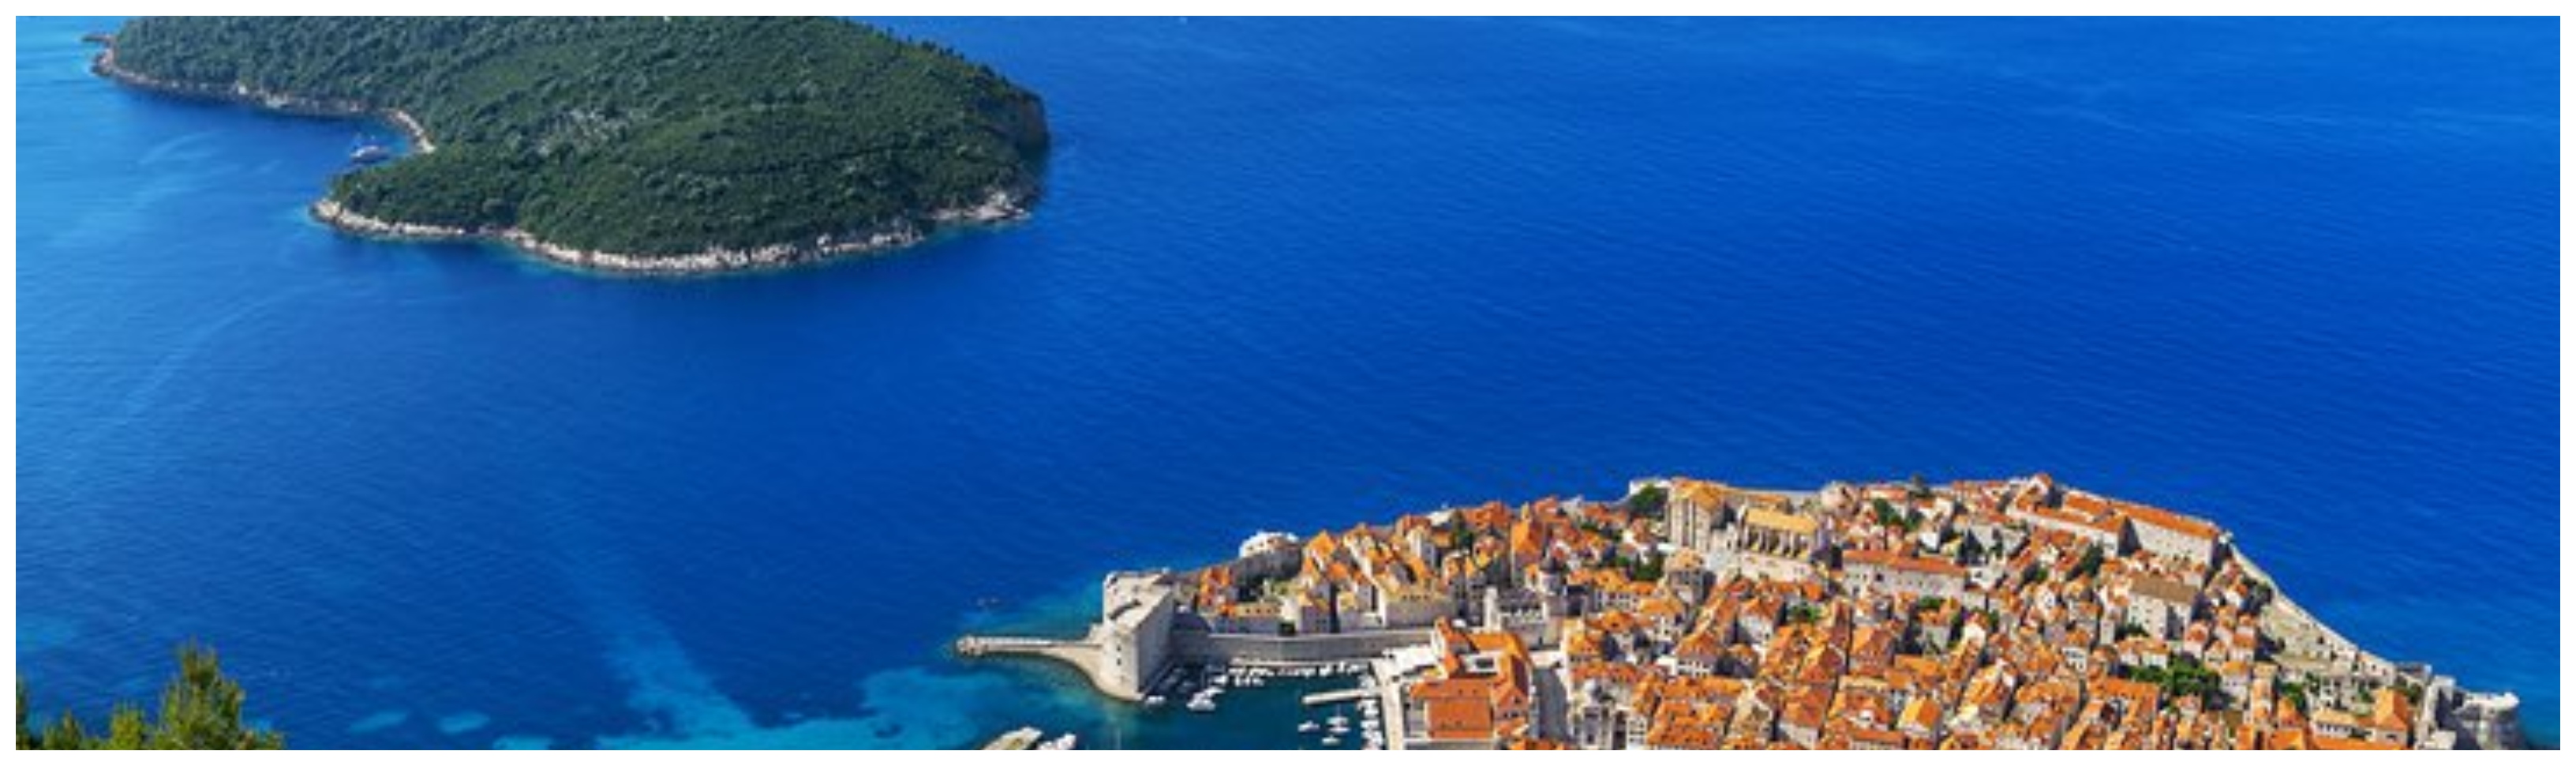 Villas on Islands near Dubrovnik